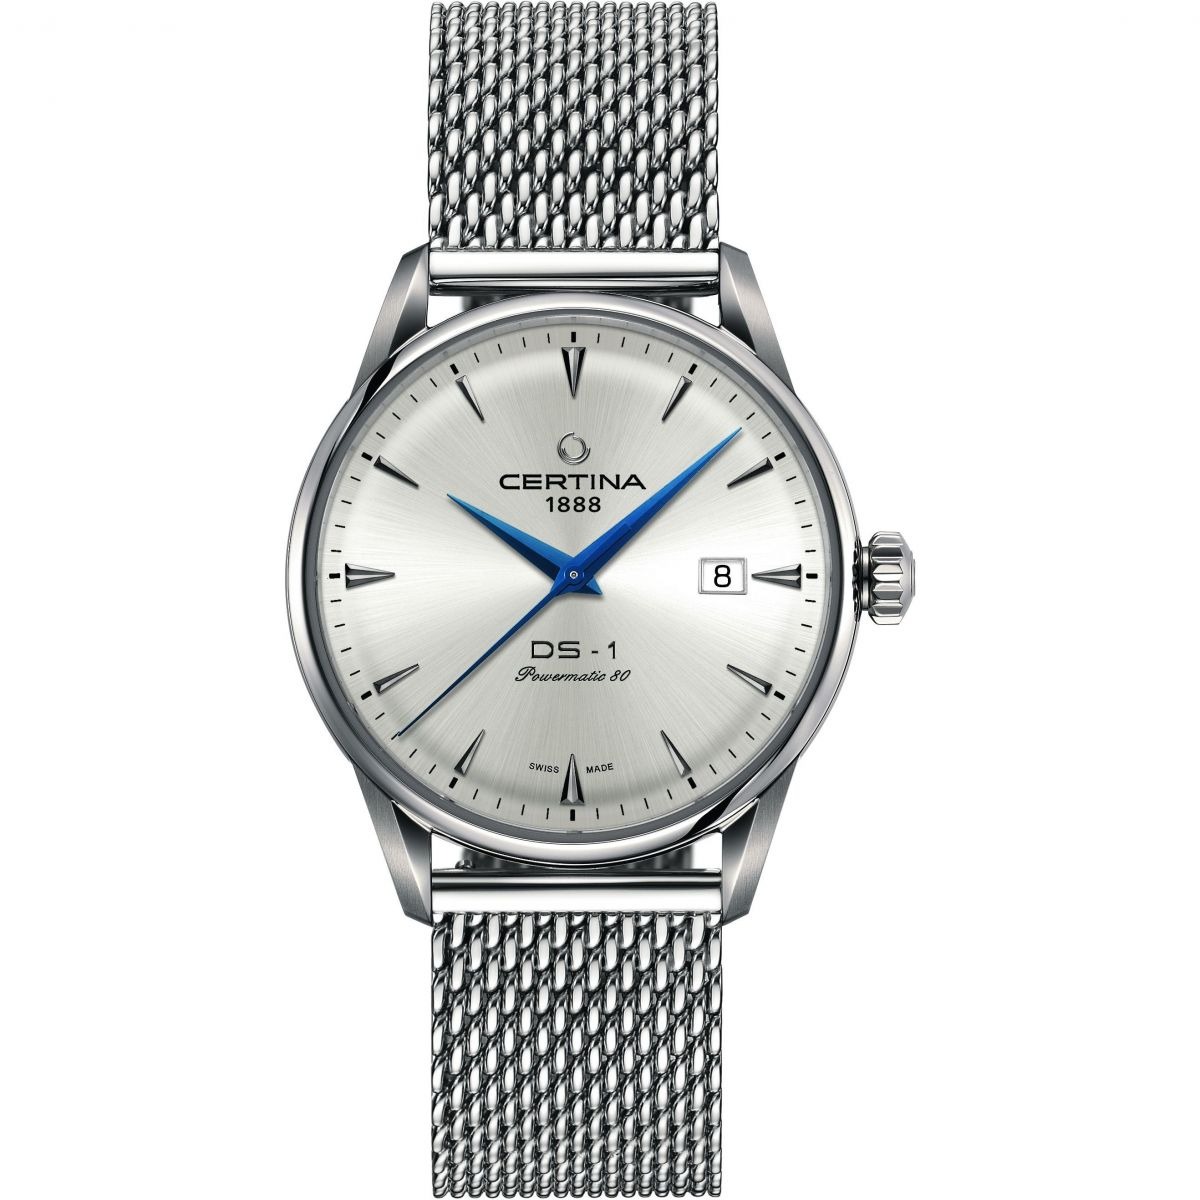 Certina Watch in Silver at Watch Shop GOOFASH